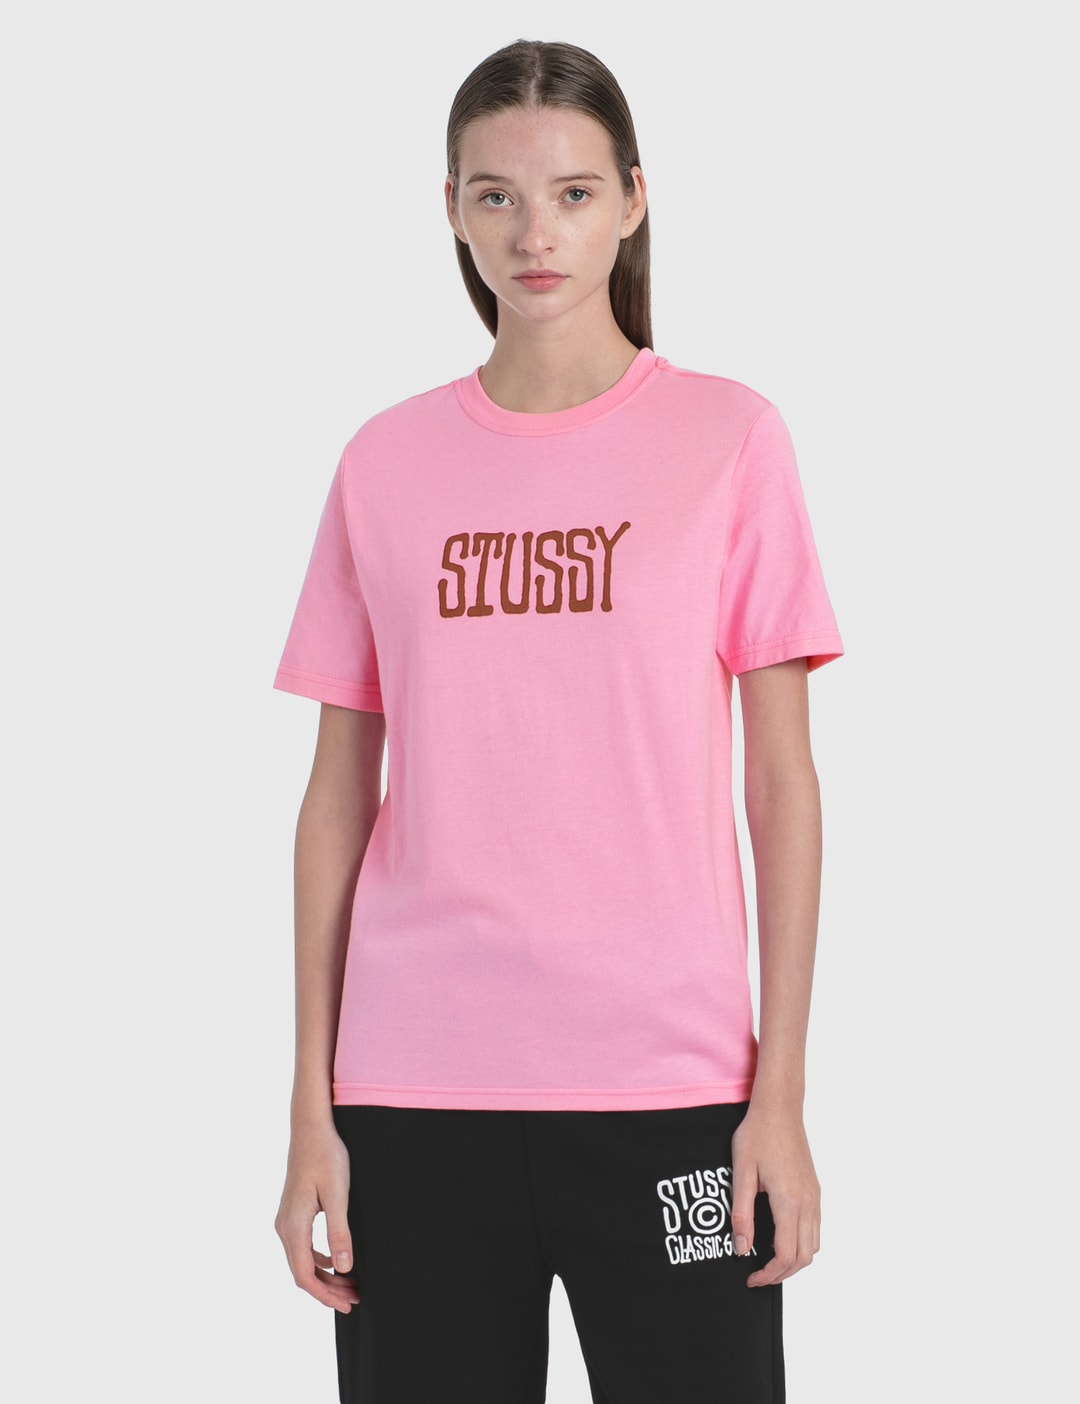 Stussy Og Stussy T Shirt Hbx ハイプビースト Hypebeast が厳選したグローバルファッション ライフスタイル